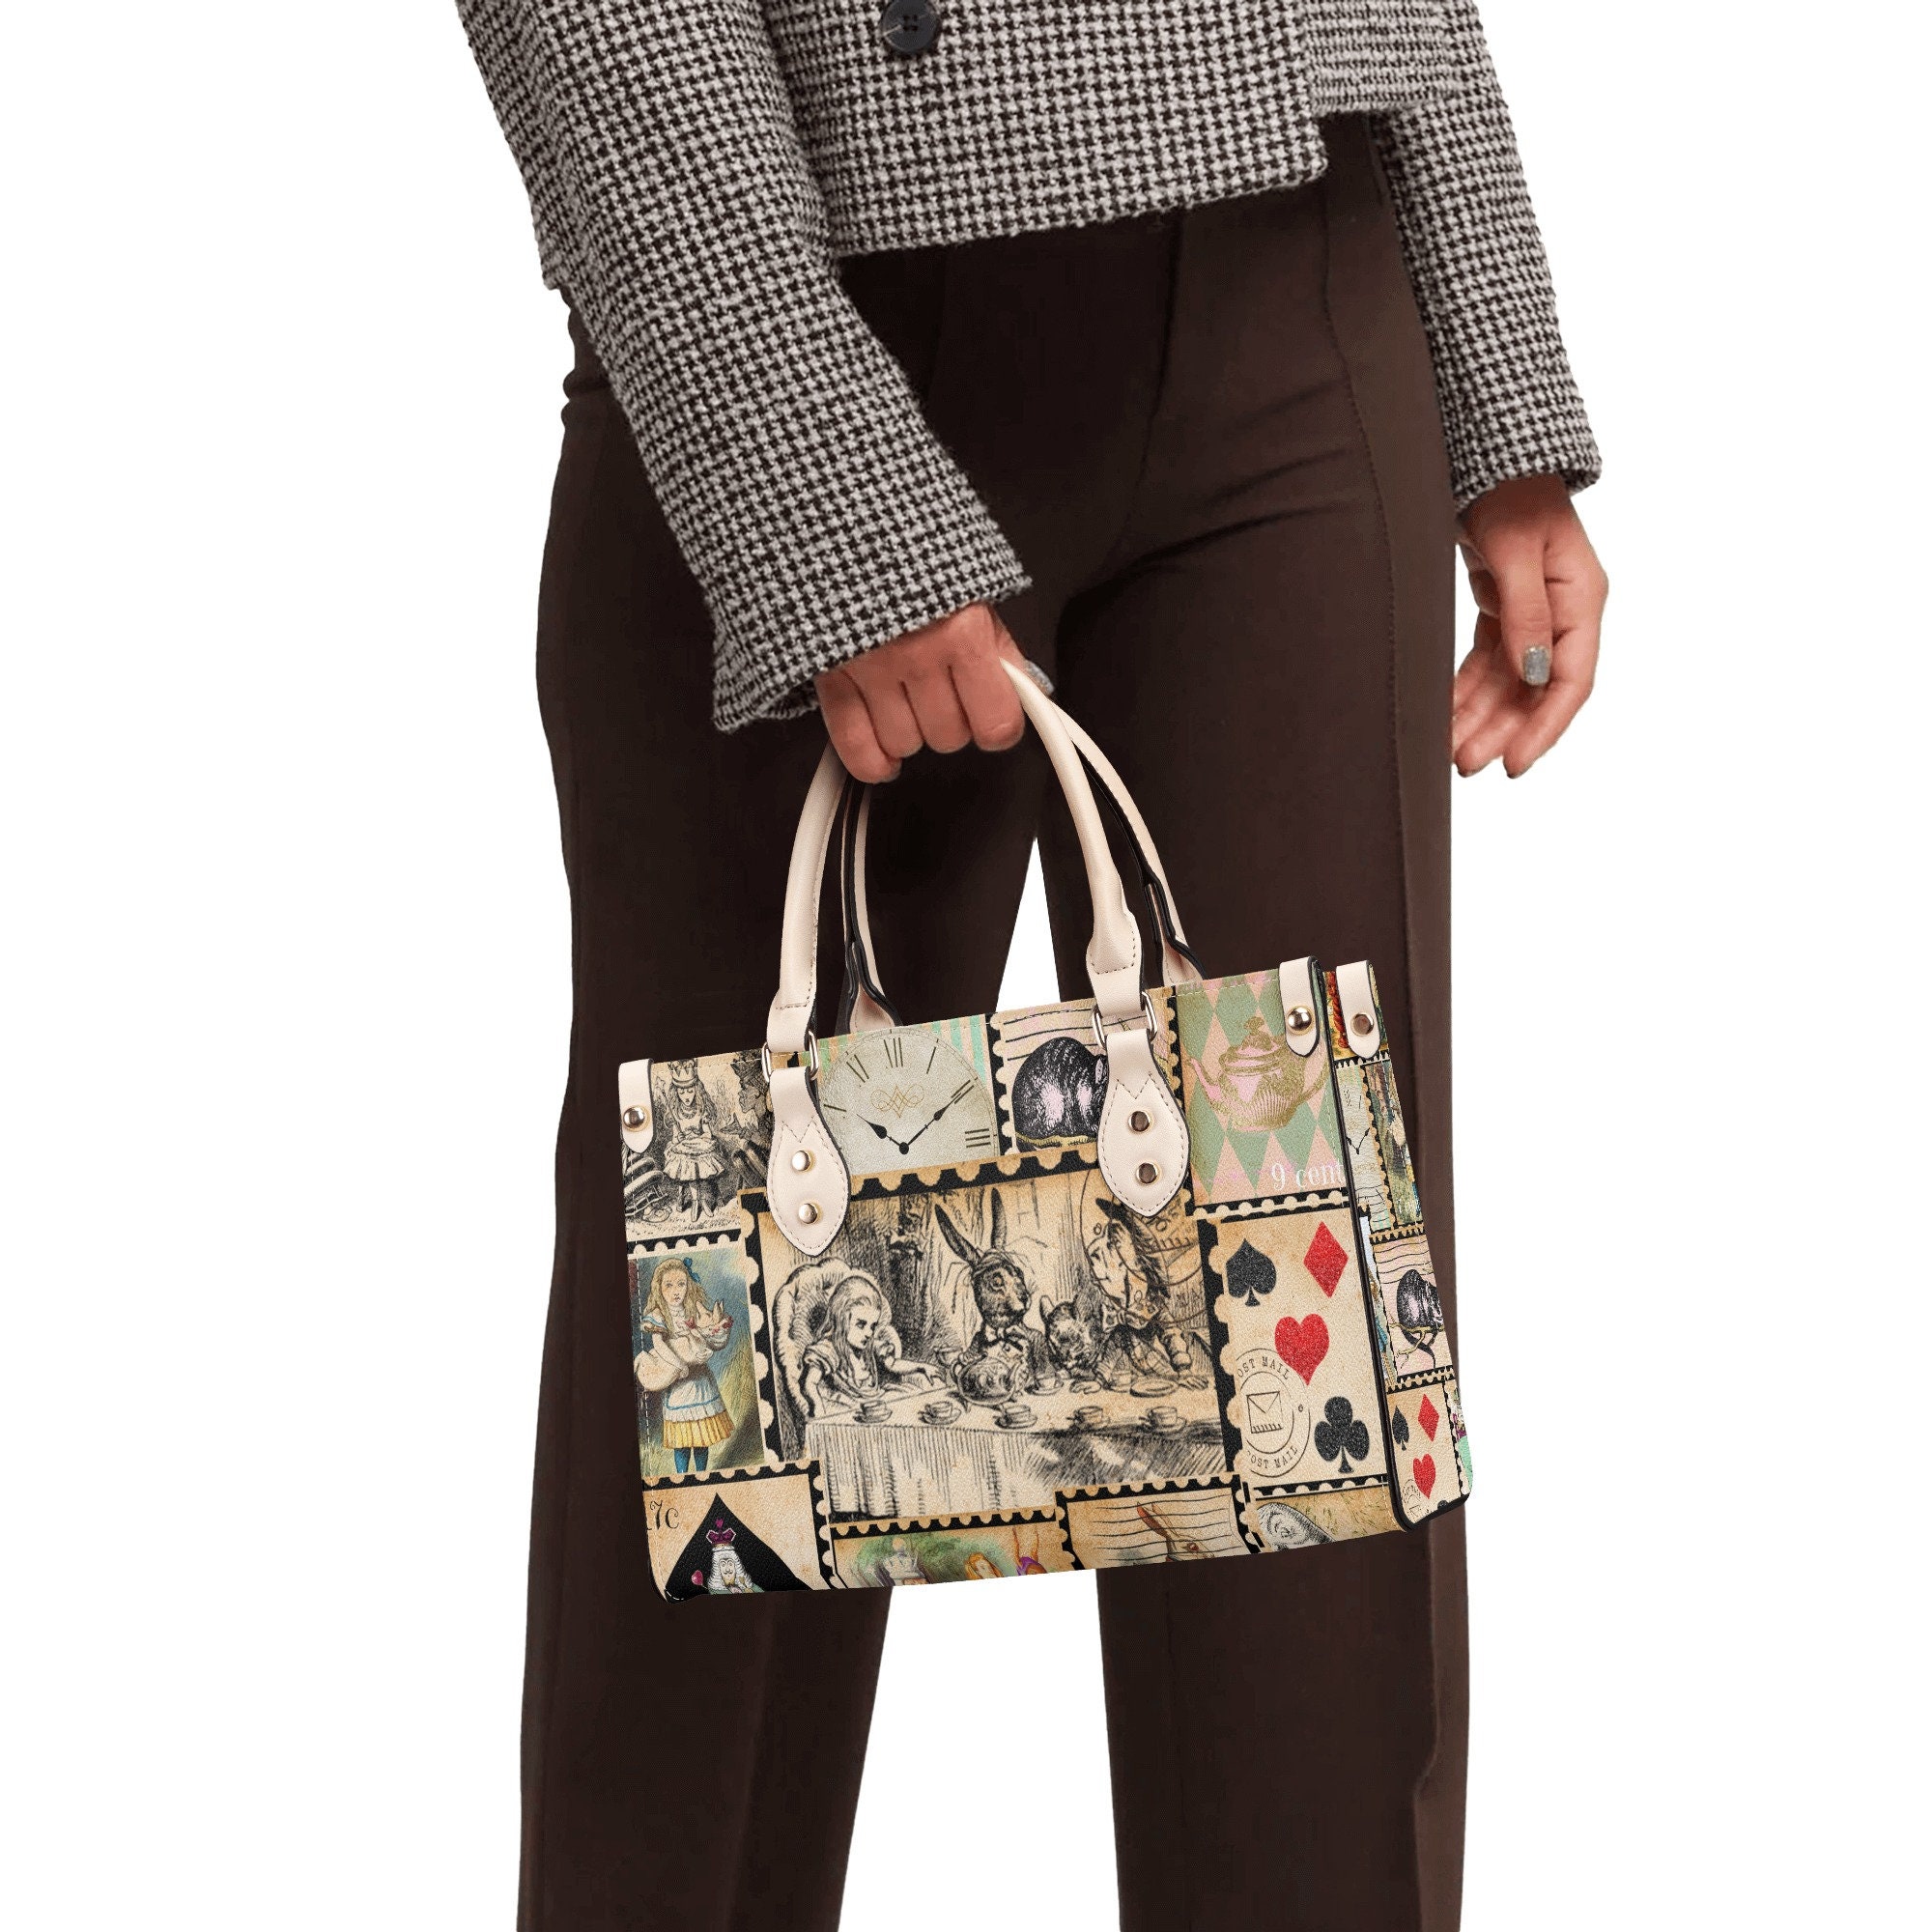 Vintage Alice In Wonderland Handbag, Womans Leather Vintage Handbag